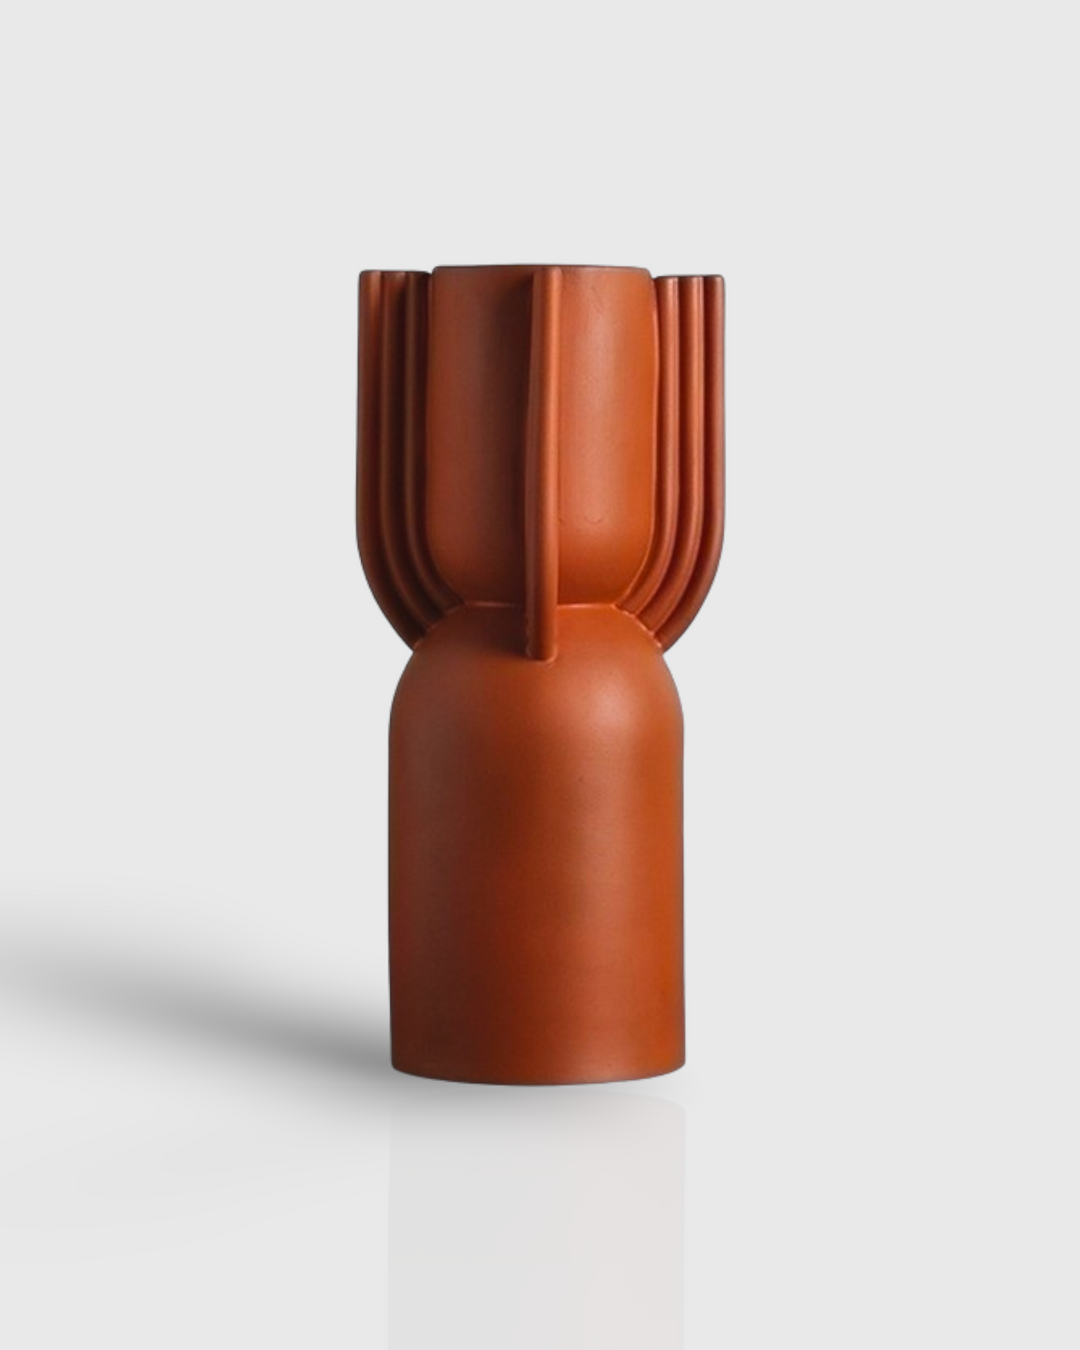 Designer-Vase MOR Vasen 13" aus Keramik boho cj decor deko & homestyle entwurf Facebook fashion happycolors herbst keramik max priori vase wohnzimmer